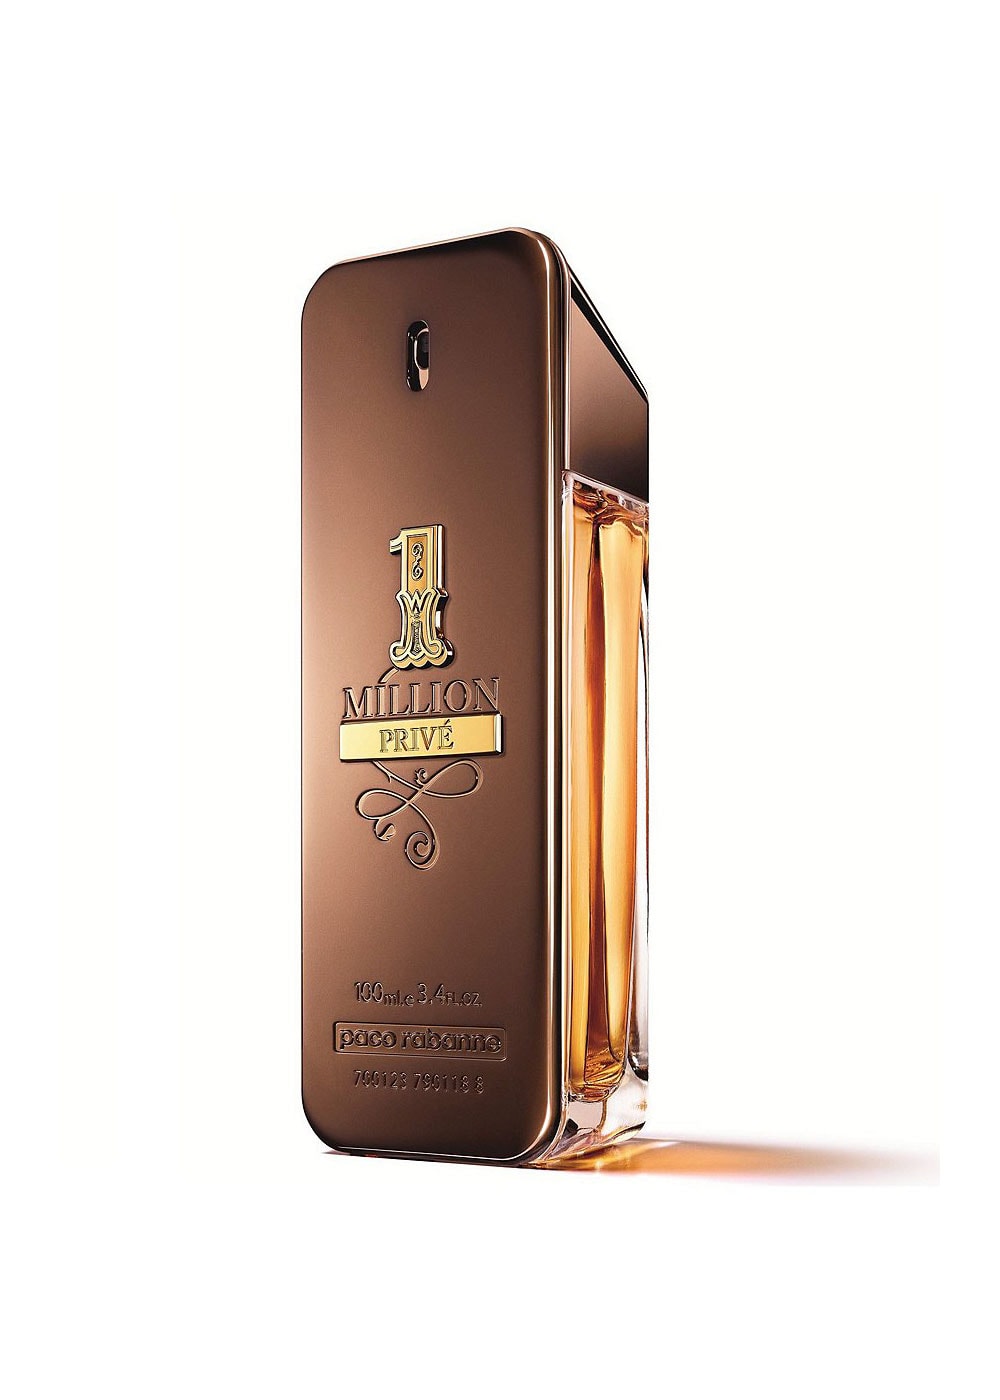 One Million Prive » Paco Rabanne » The Parfumerie » Sri Lanka